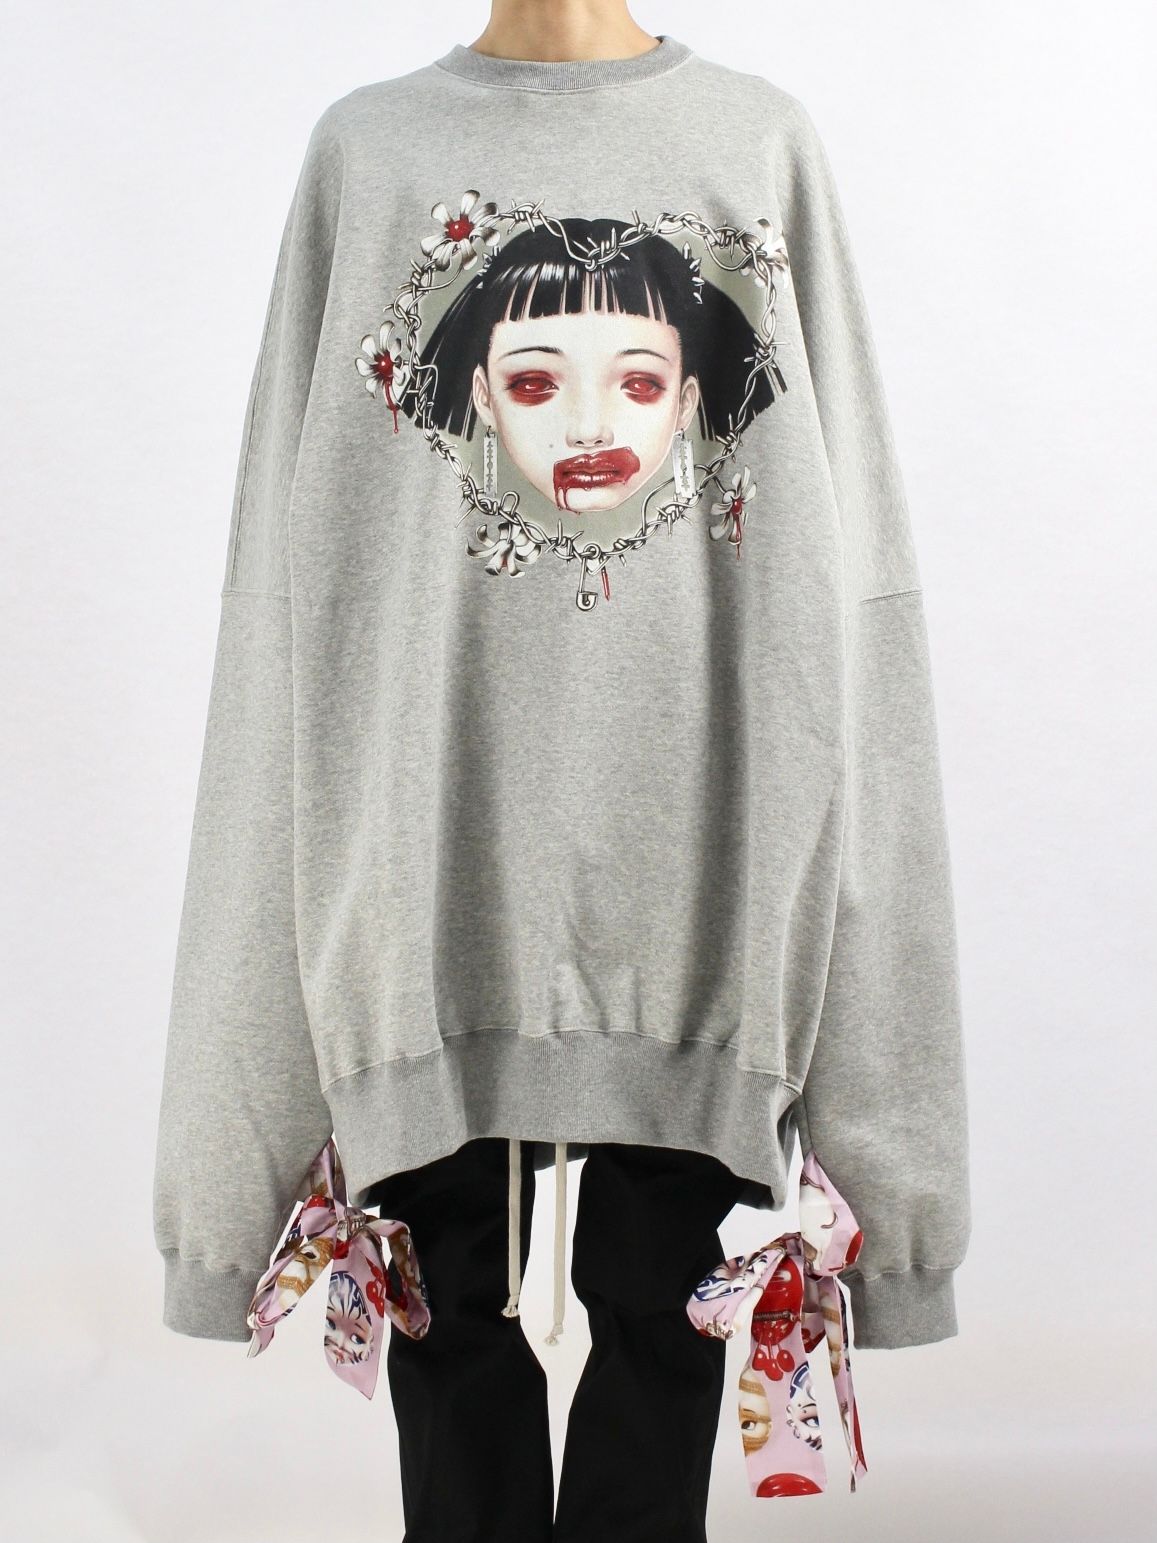 KIDILL - ハーレクインプリント ドッキング スーパーオーバー スウェットシャツ / Oversized Pullover Sweat  Harlequin Girl / グレー | STORY